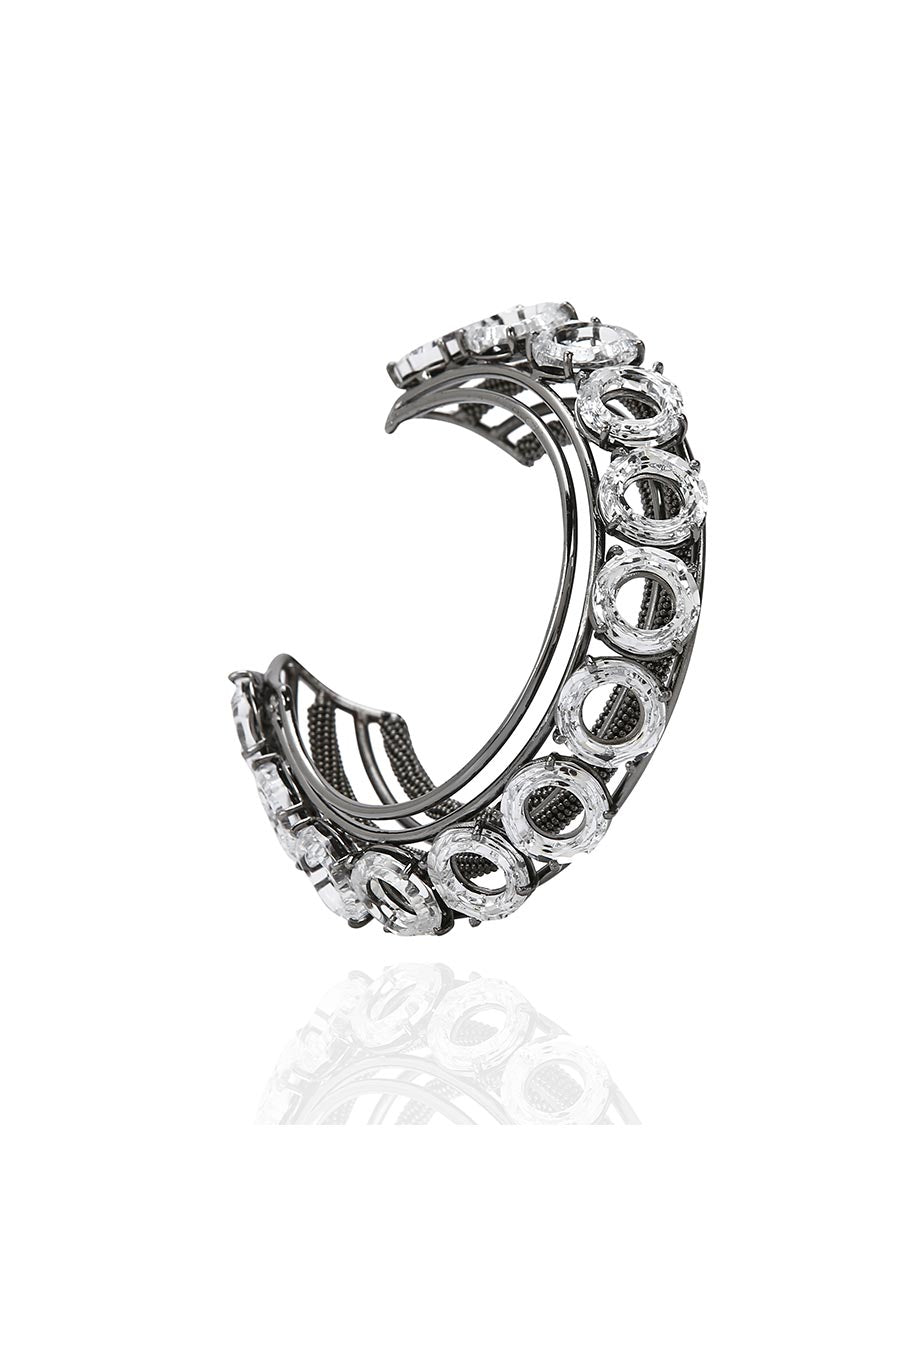 Circular Rings Silver Plated Cuffs